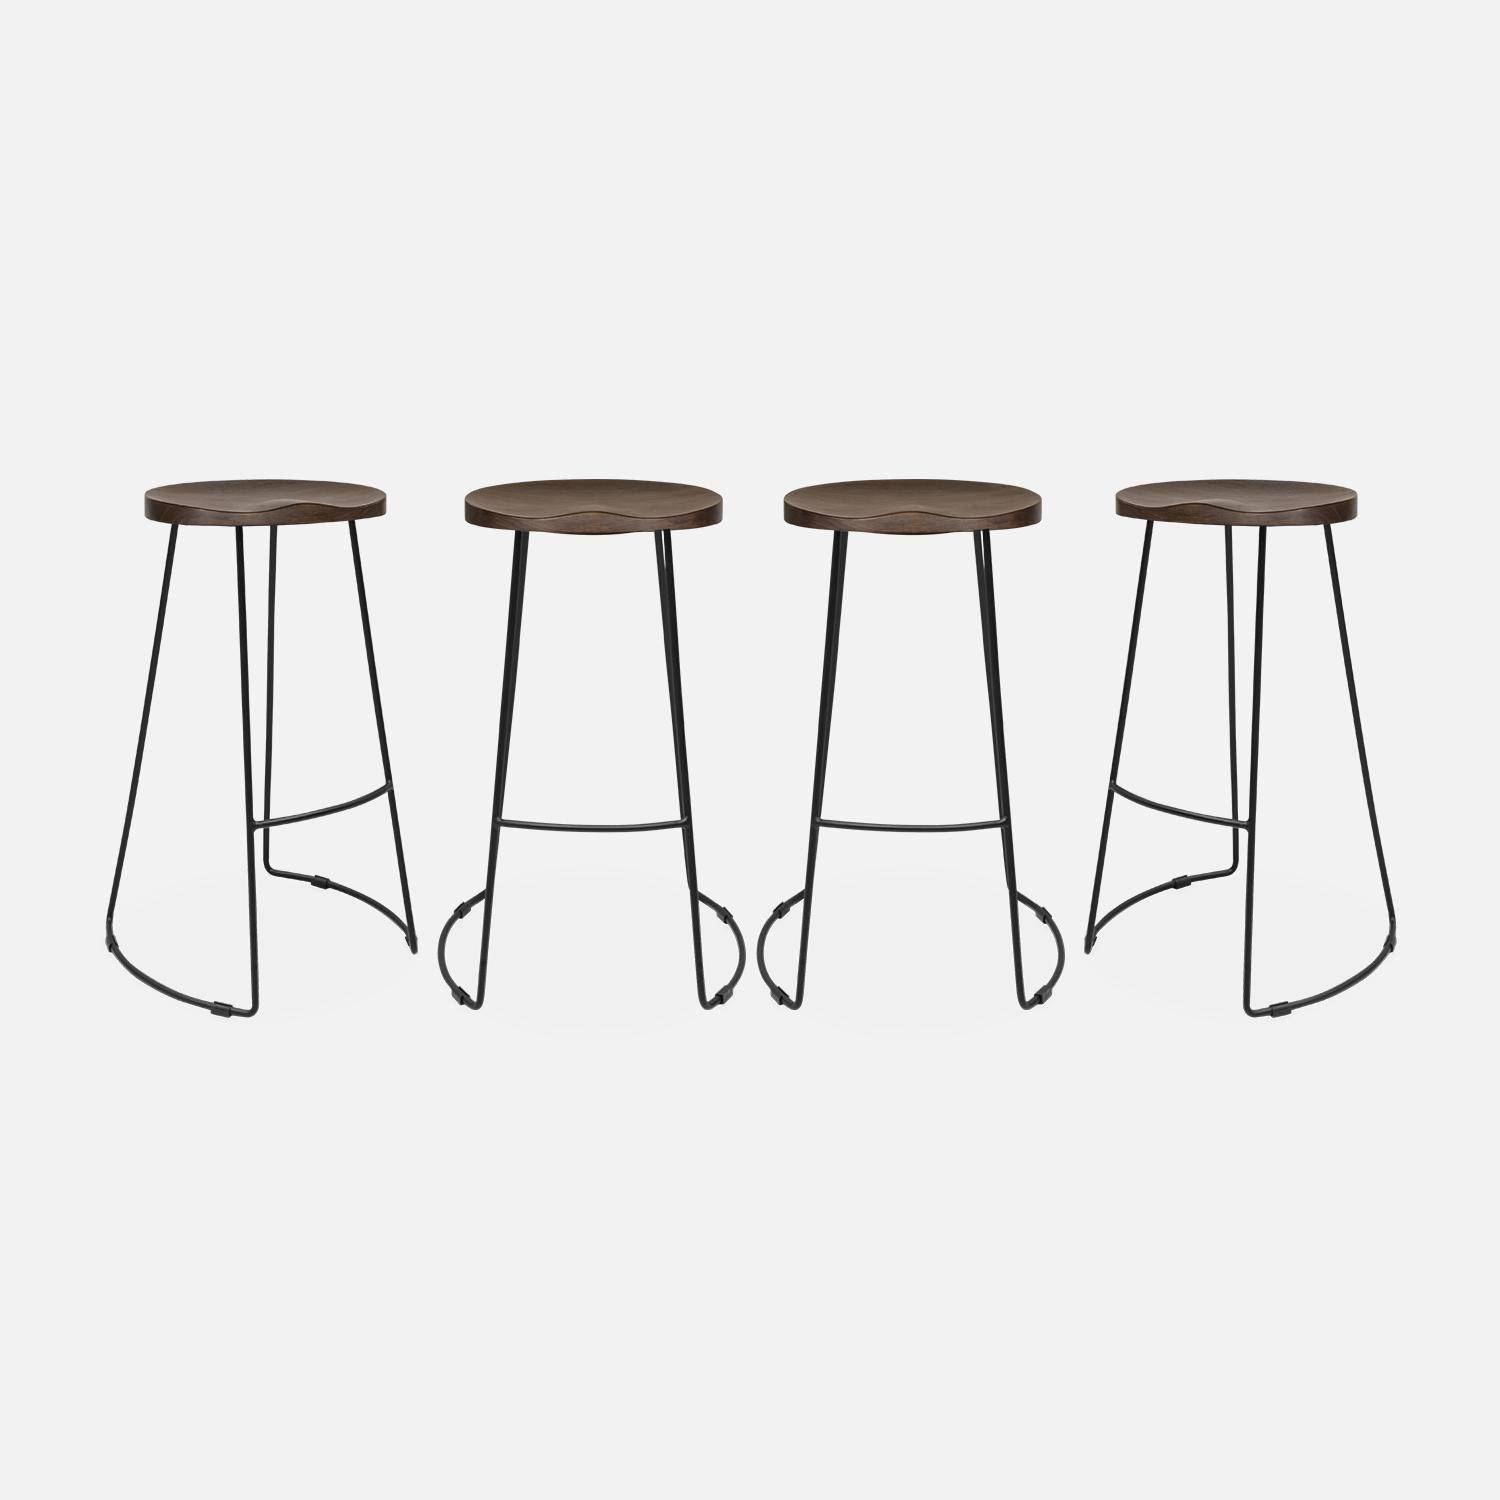 Set of 4 industrial metal and wooden bar stools, 47x40x75cm, Jaya, Light Walnut, Mango wood seat, black metal legs,sweeek,Photo3